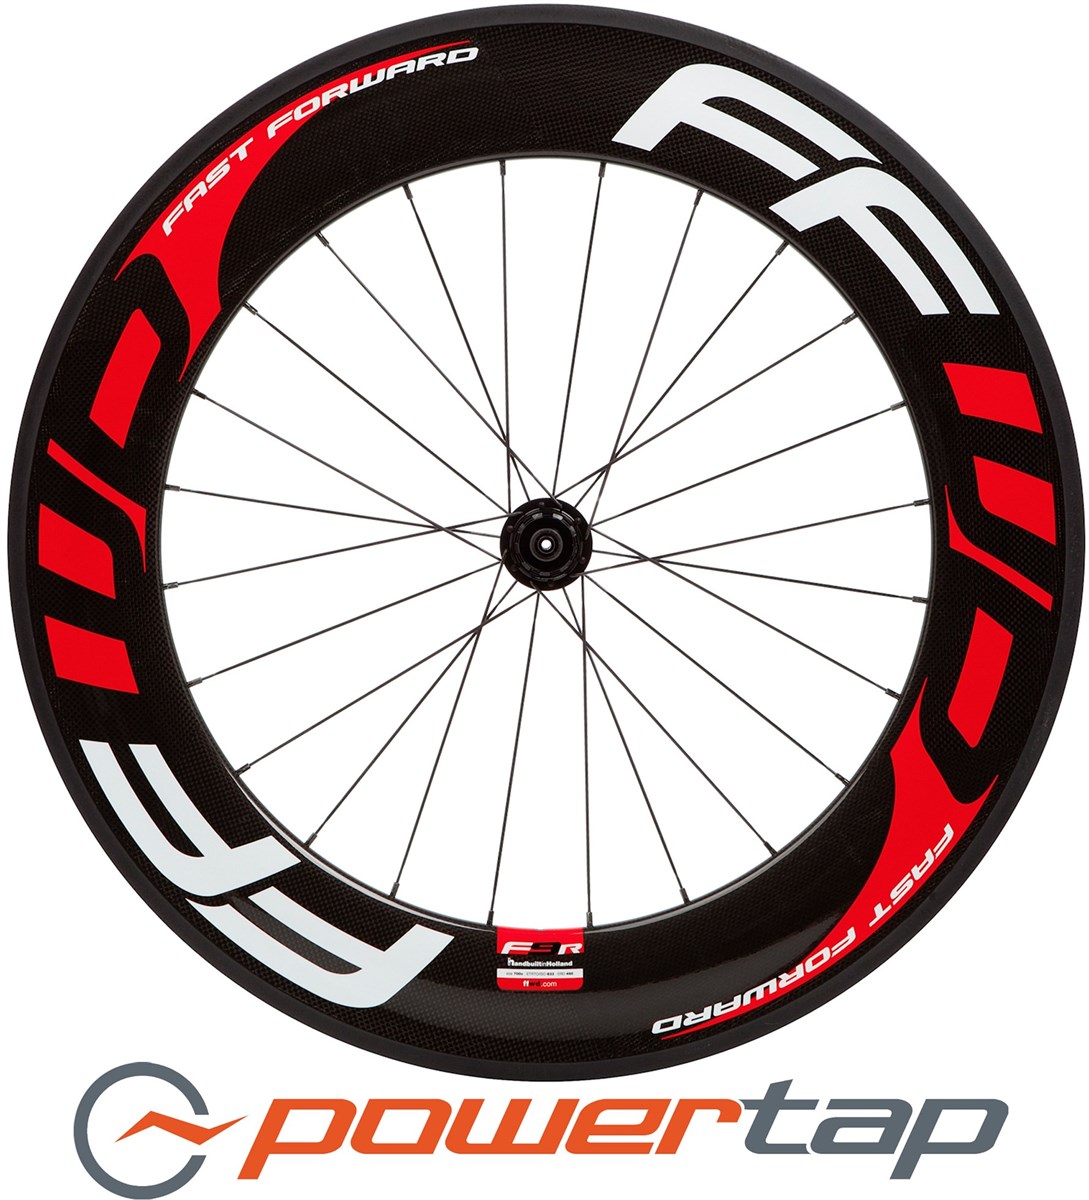 Fast Forward F9R PowerTap G3 Full Carbon Clincher Rear Wheel product image